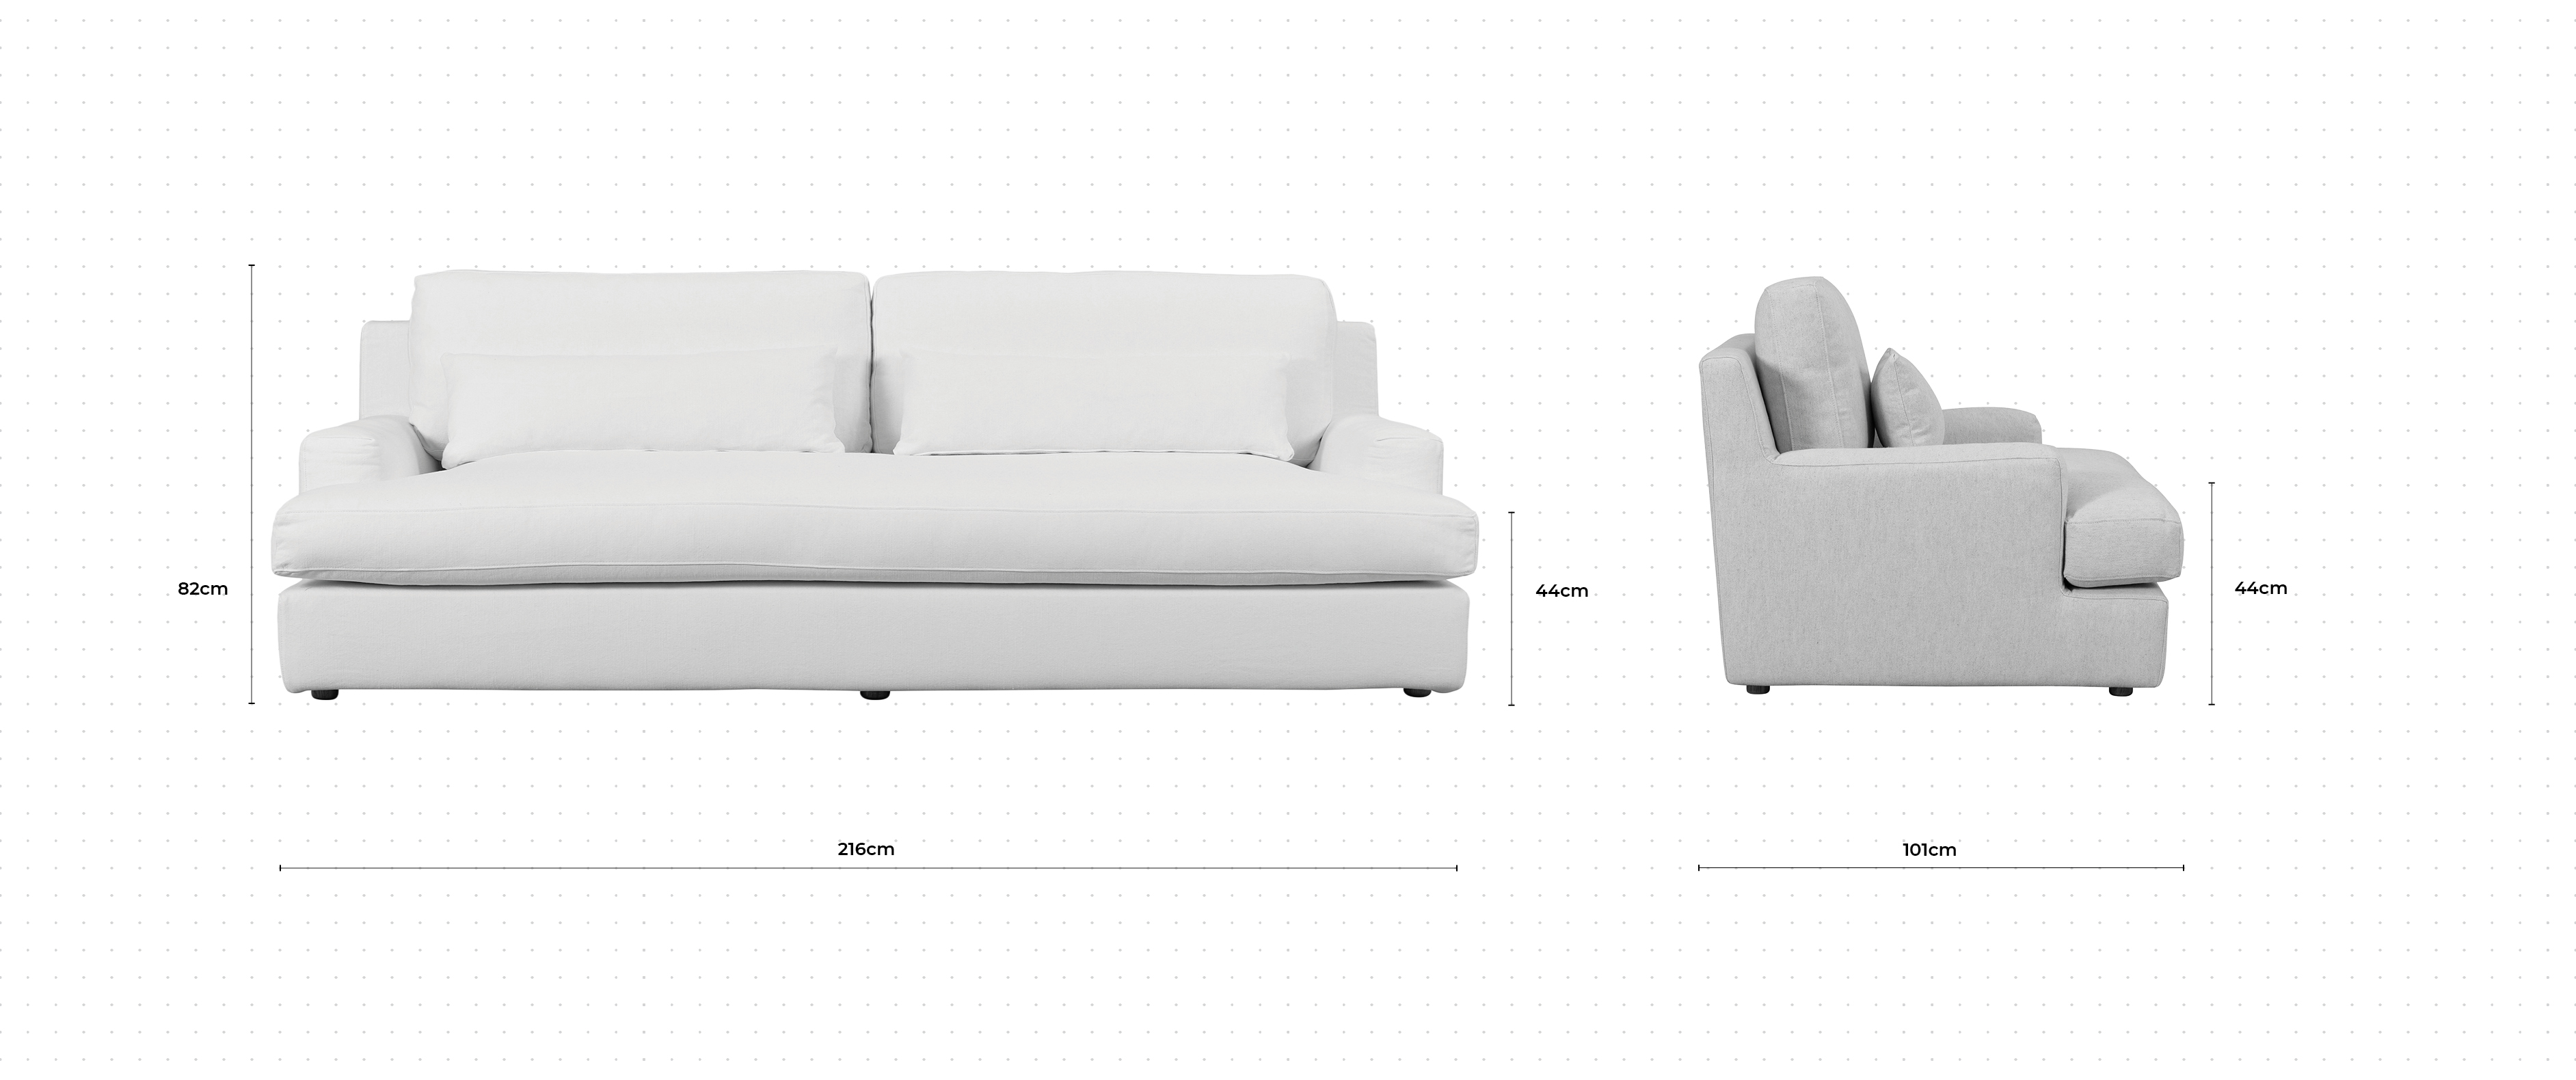 Panama 3 Seater Sofa dimensions